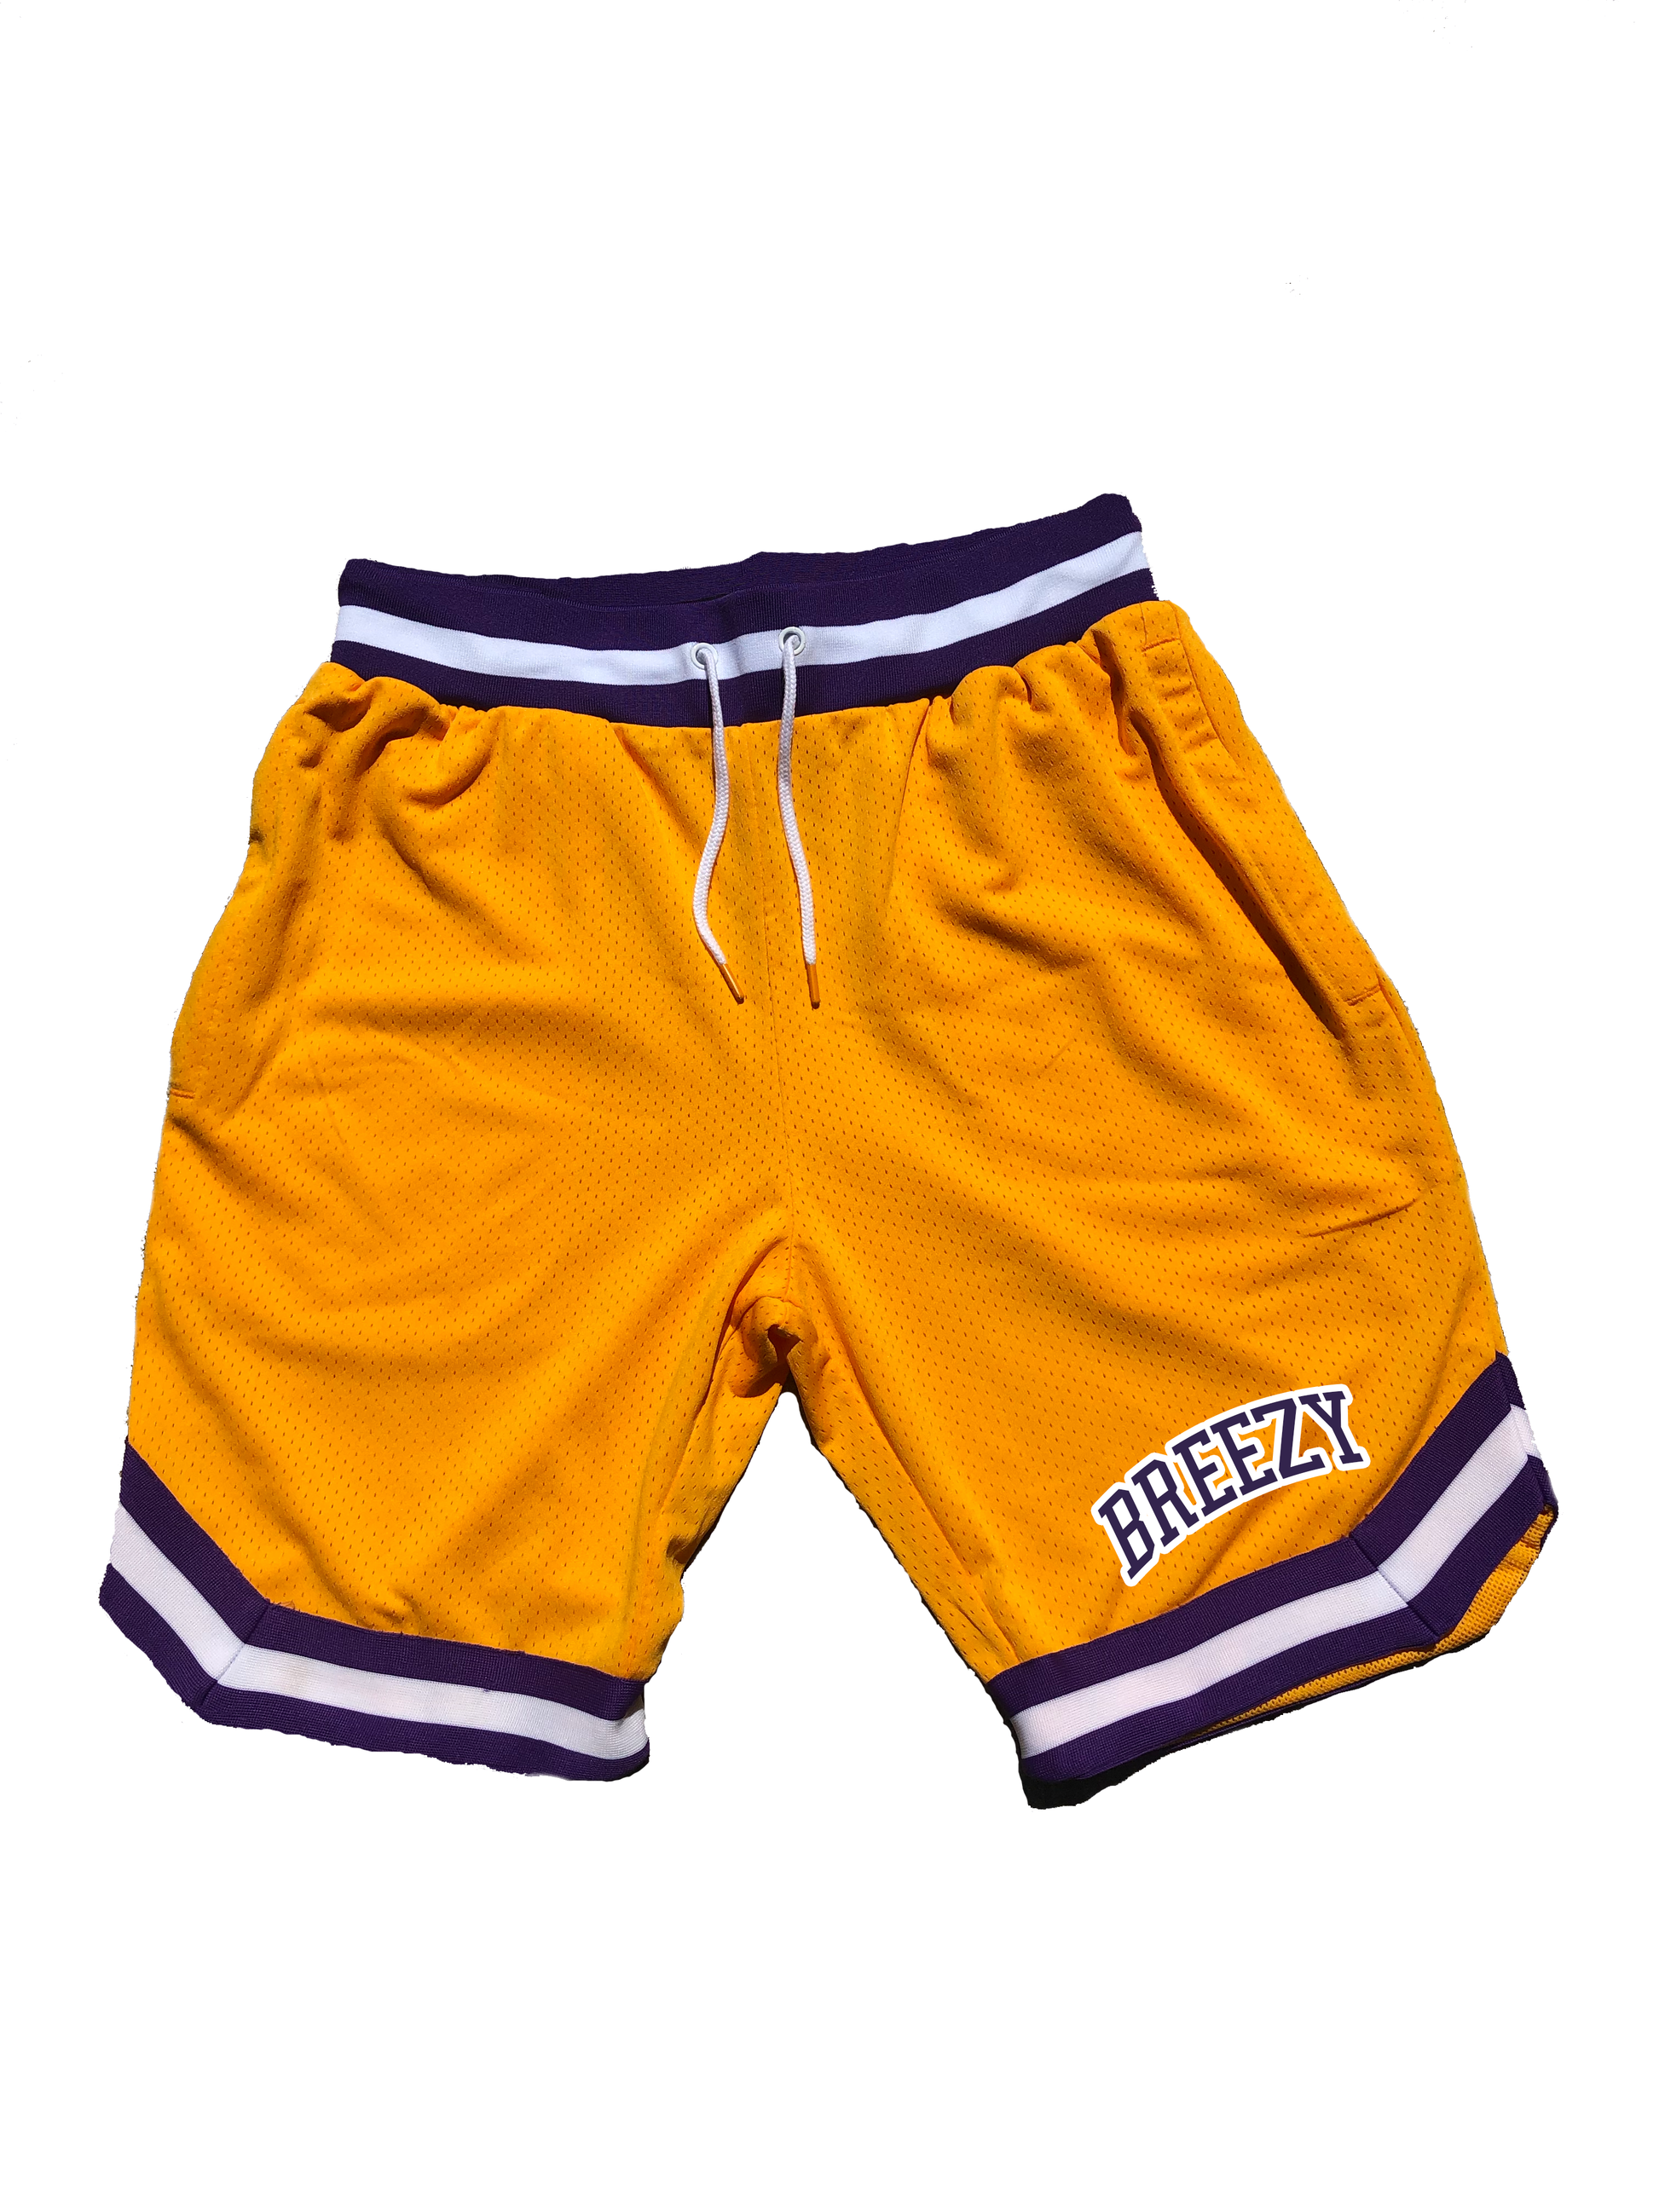 Gold Basketball Shorts - Breezy Season 